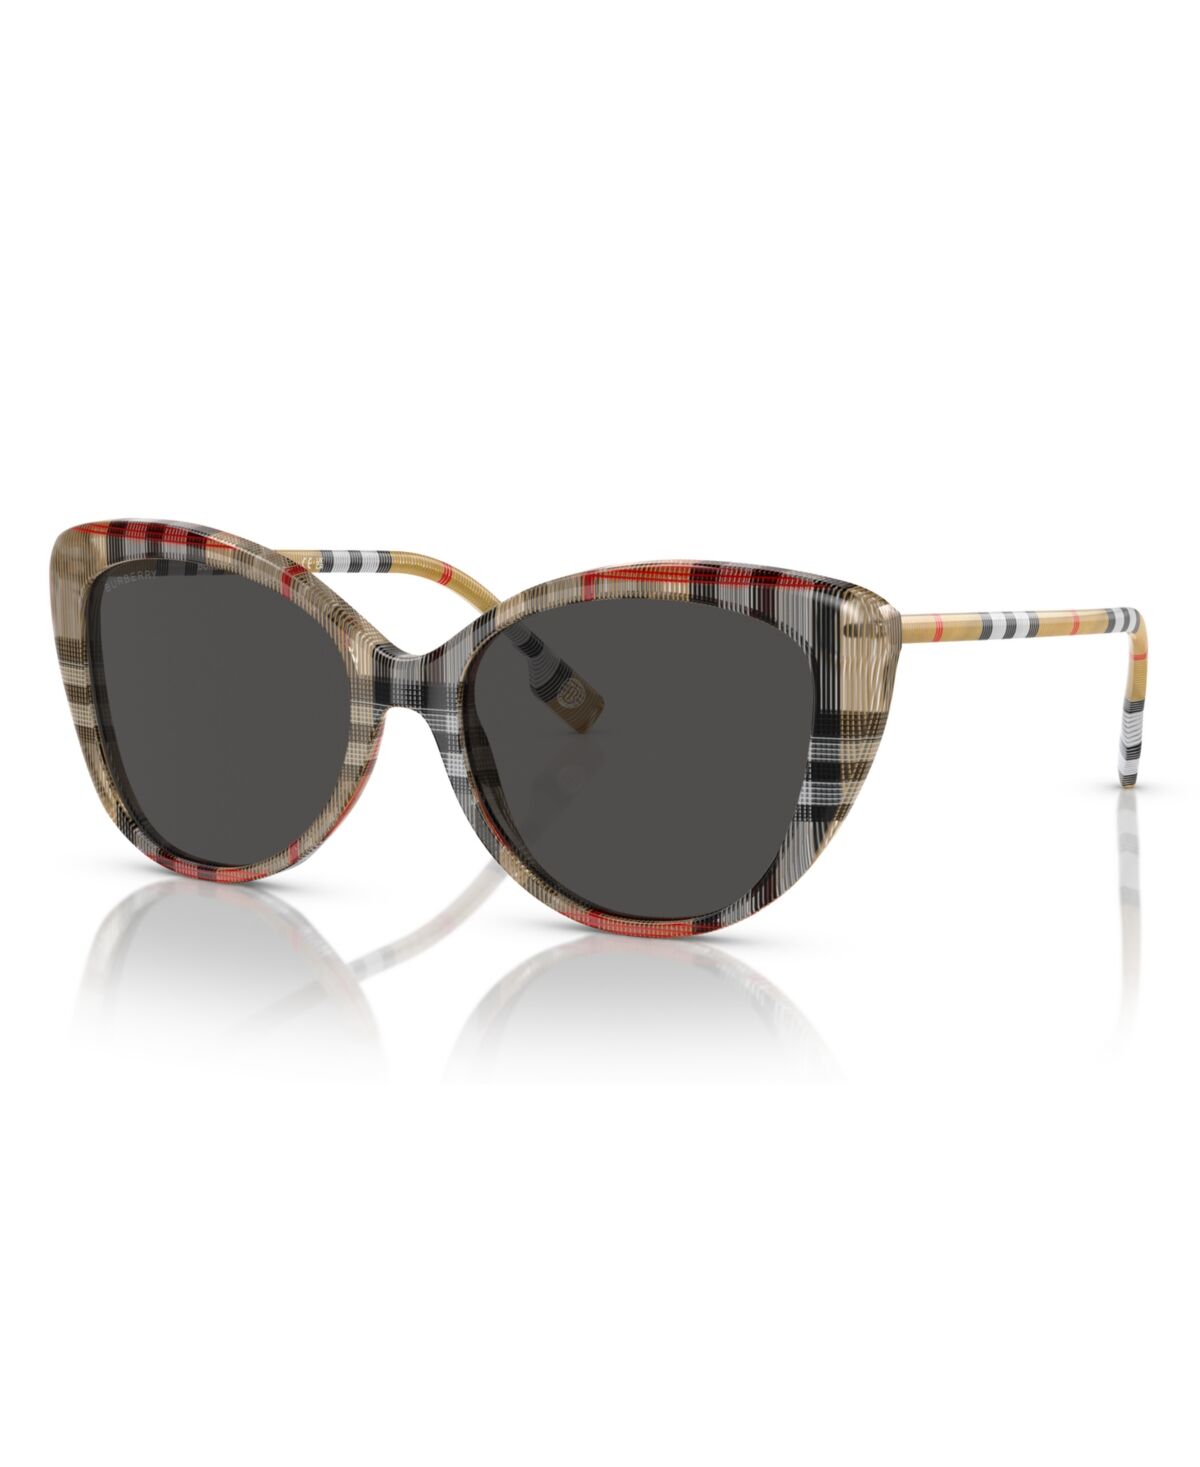 Burberry Women's Sunglasses BE4407 - Vintage Check